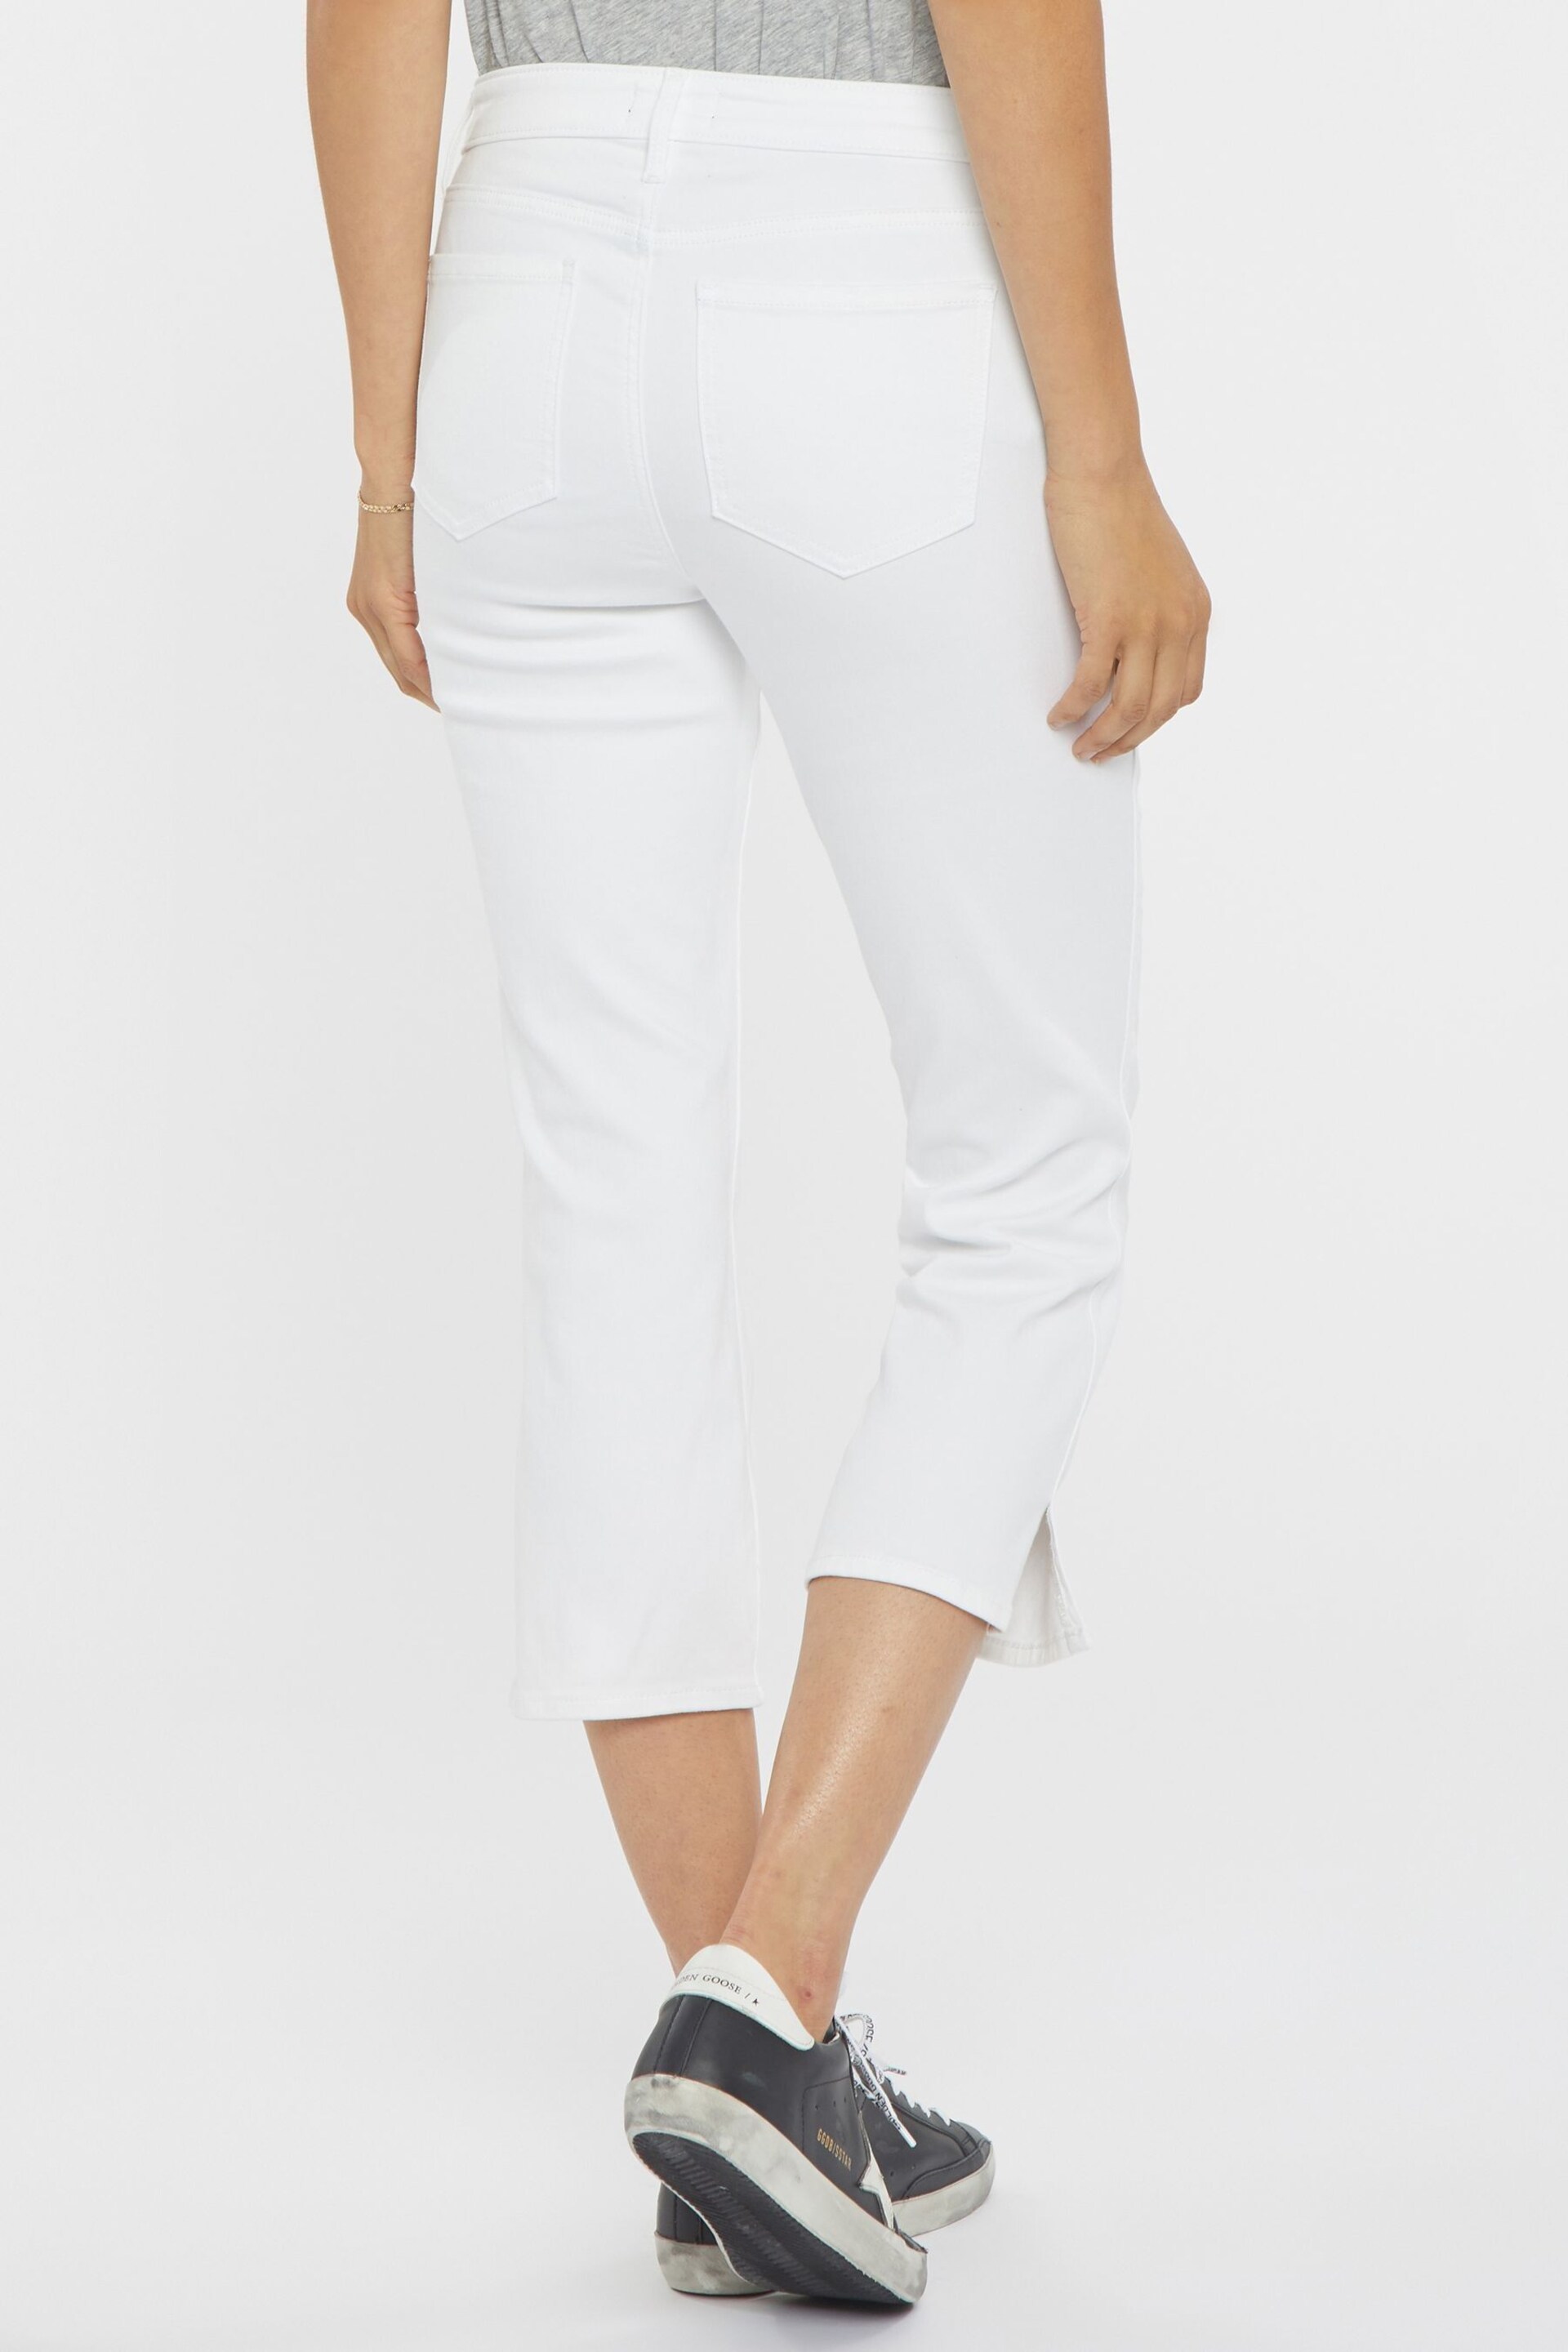 NYDJ Chloe Capri Cropped Jeans - Image 2 of 4